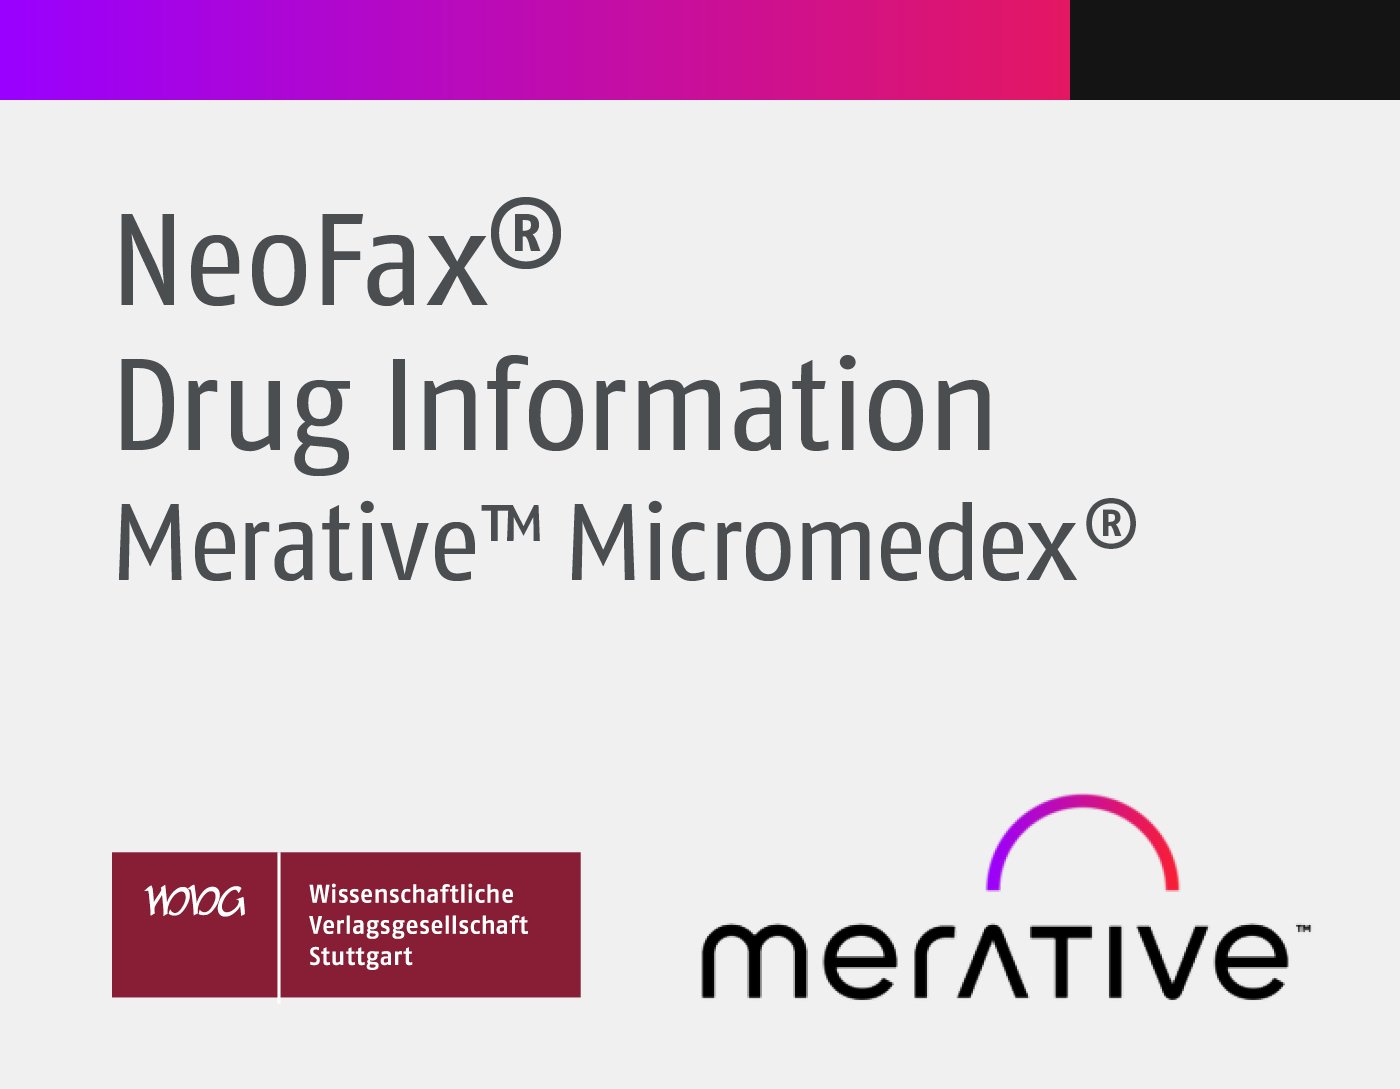 Standard NeoFax® Drug Information